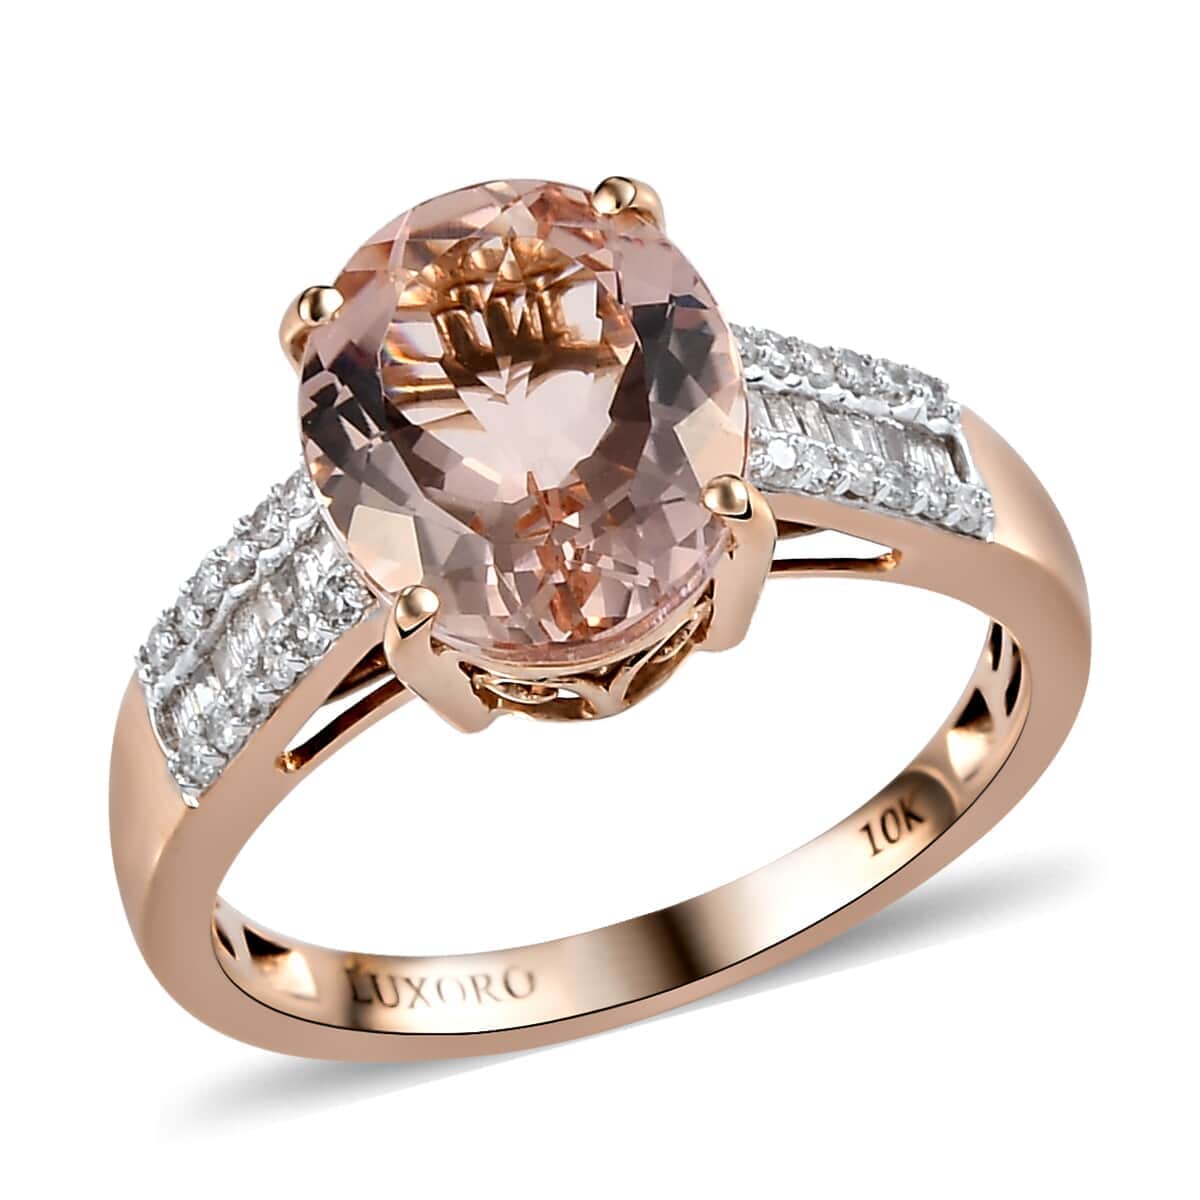 Luxoro 10K Rose Gold Premium Marropino Morganite and Diamond Ring (Size 7.0) 3.40 ctw image number 0